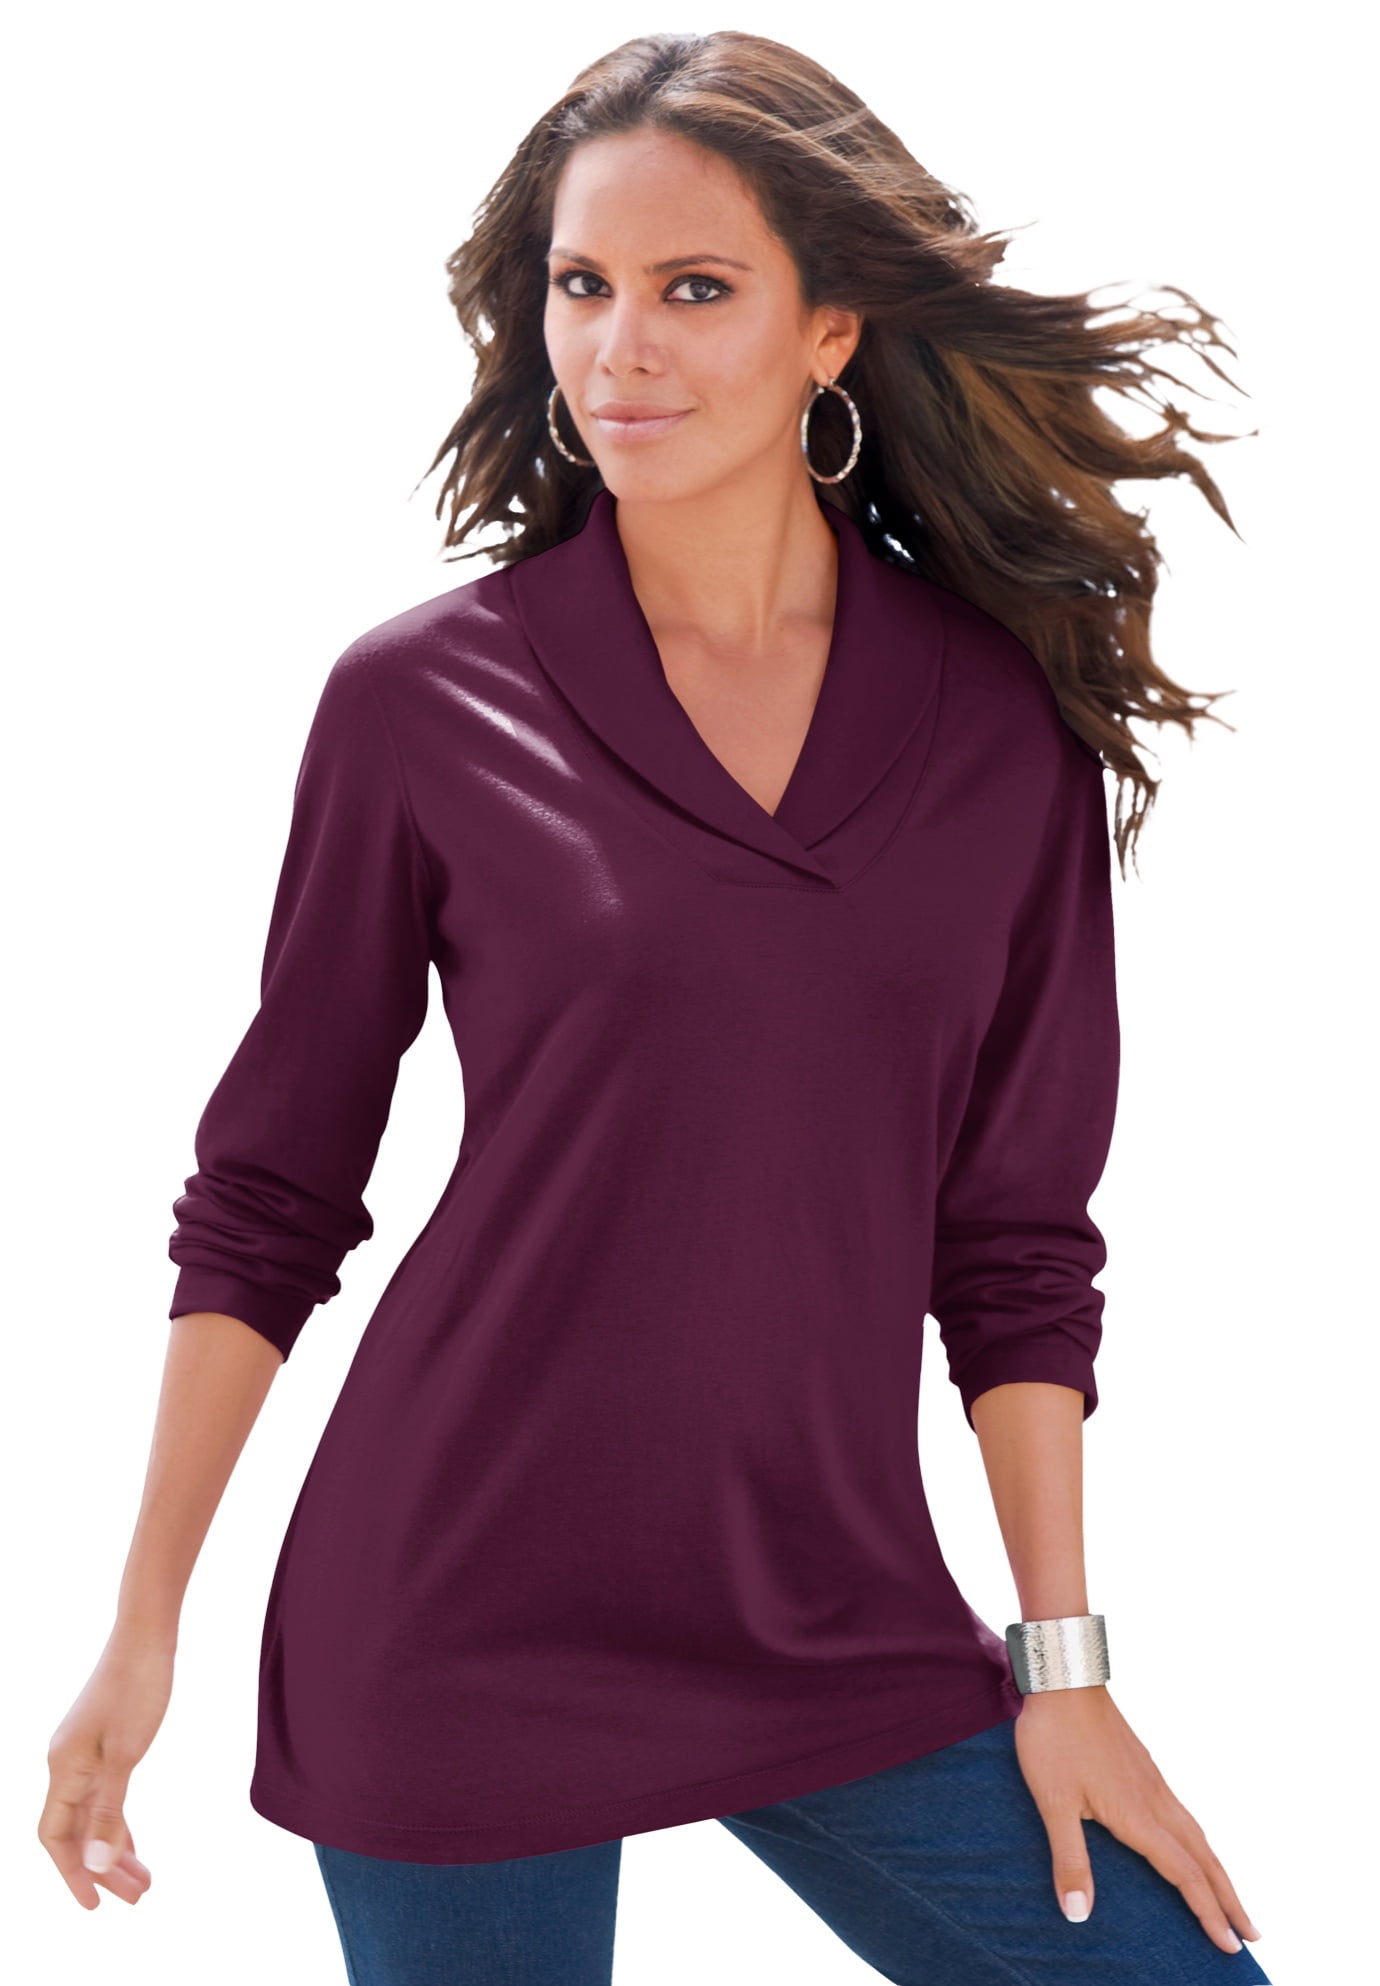 utilsigtet Sober Værdiløs Roaman's Women's Plus Size Shawl Collar Ultimate Tee Long Sleeve Shirt -  Walmart.com